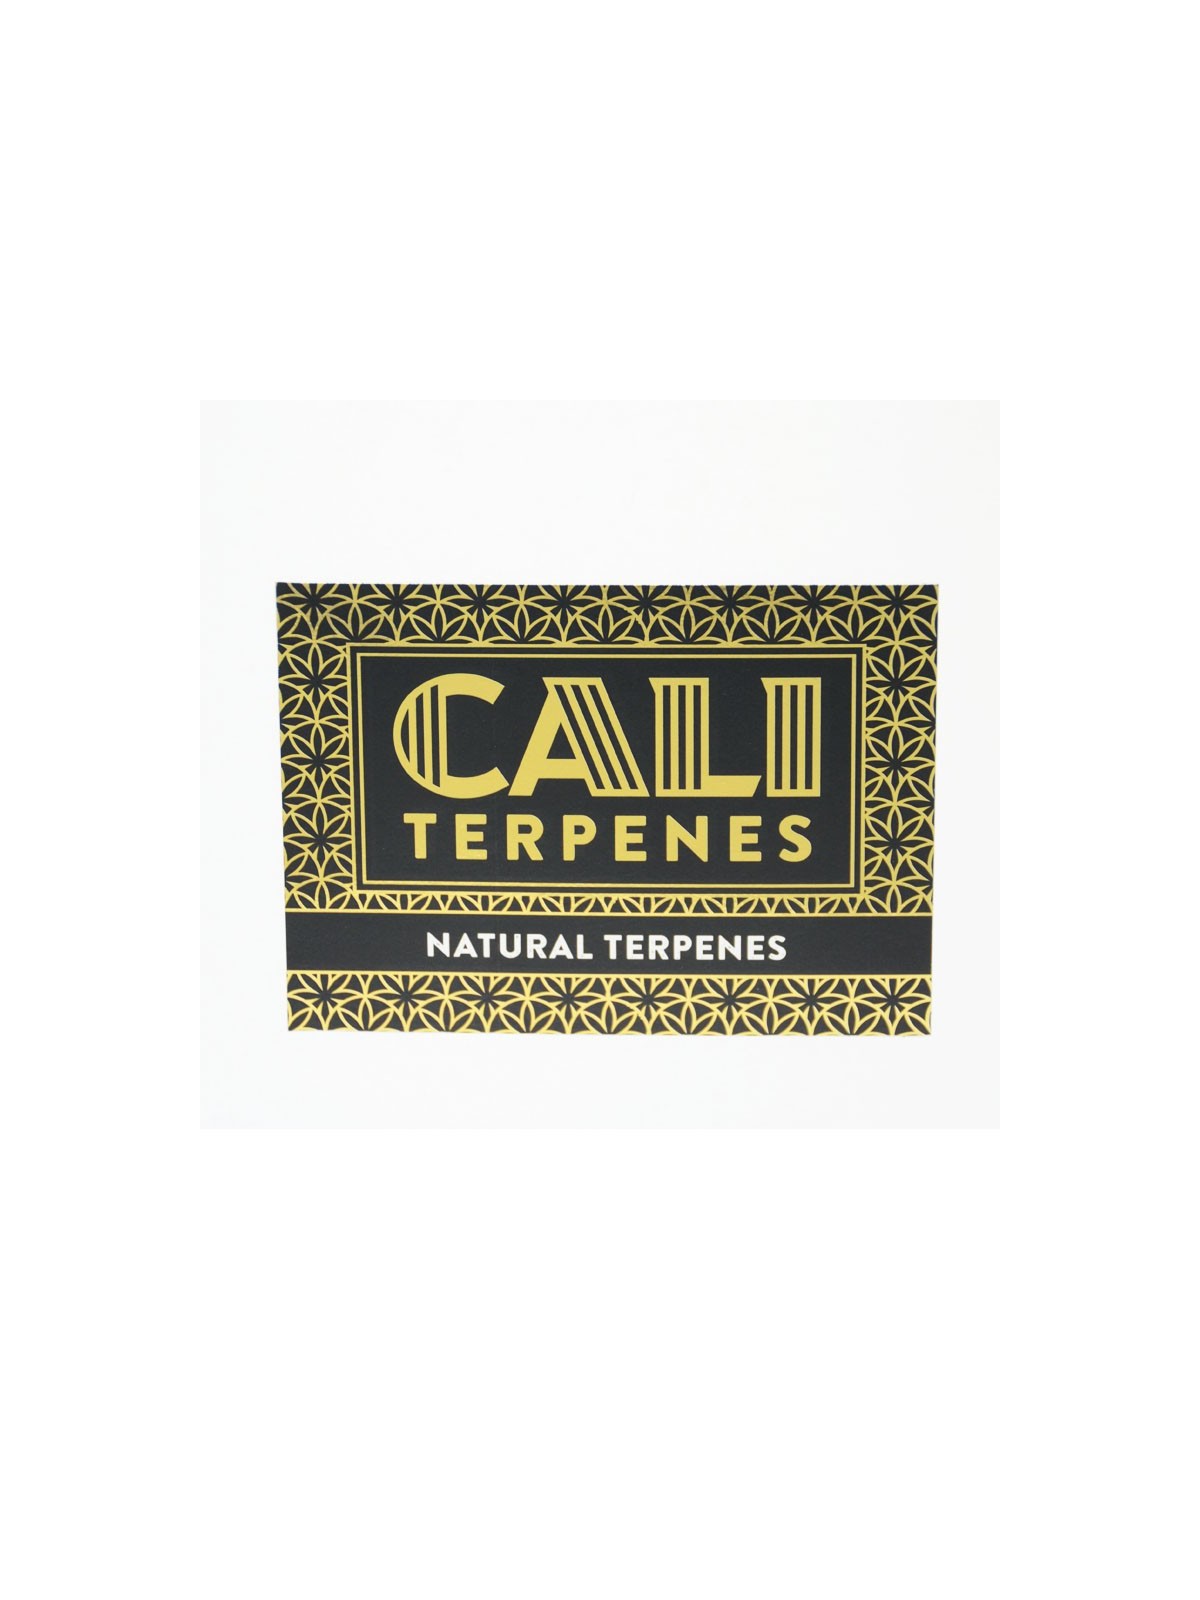 Cali Terpenes stickers